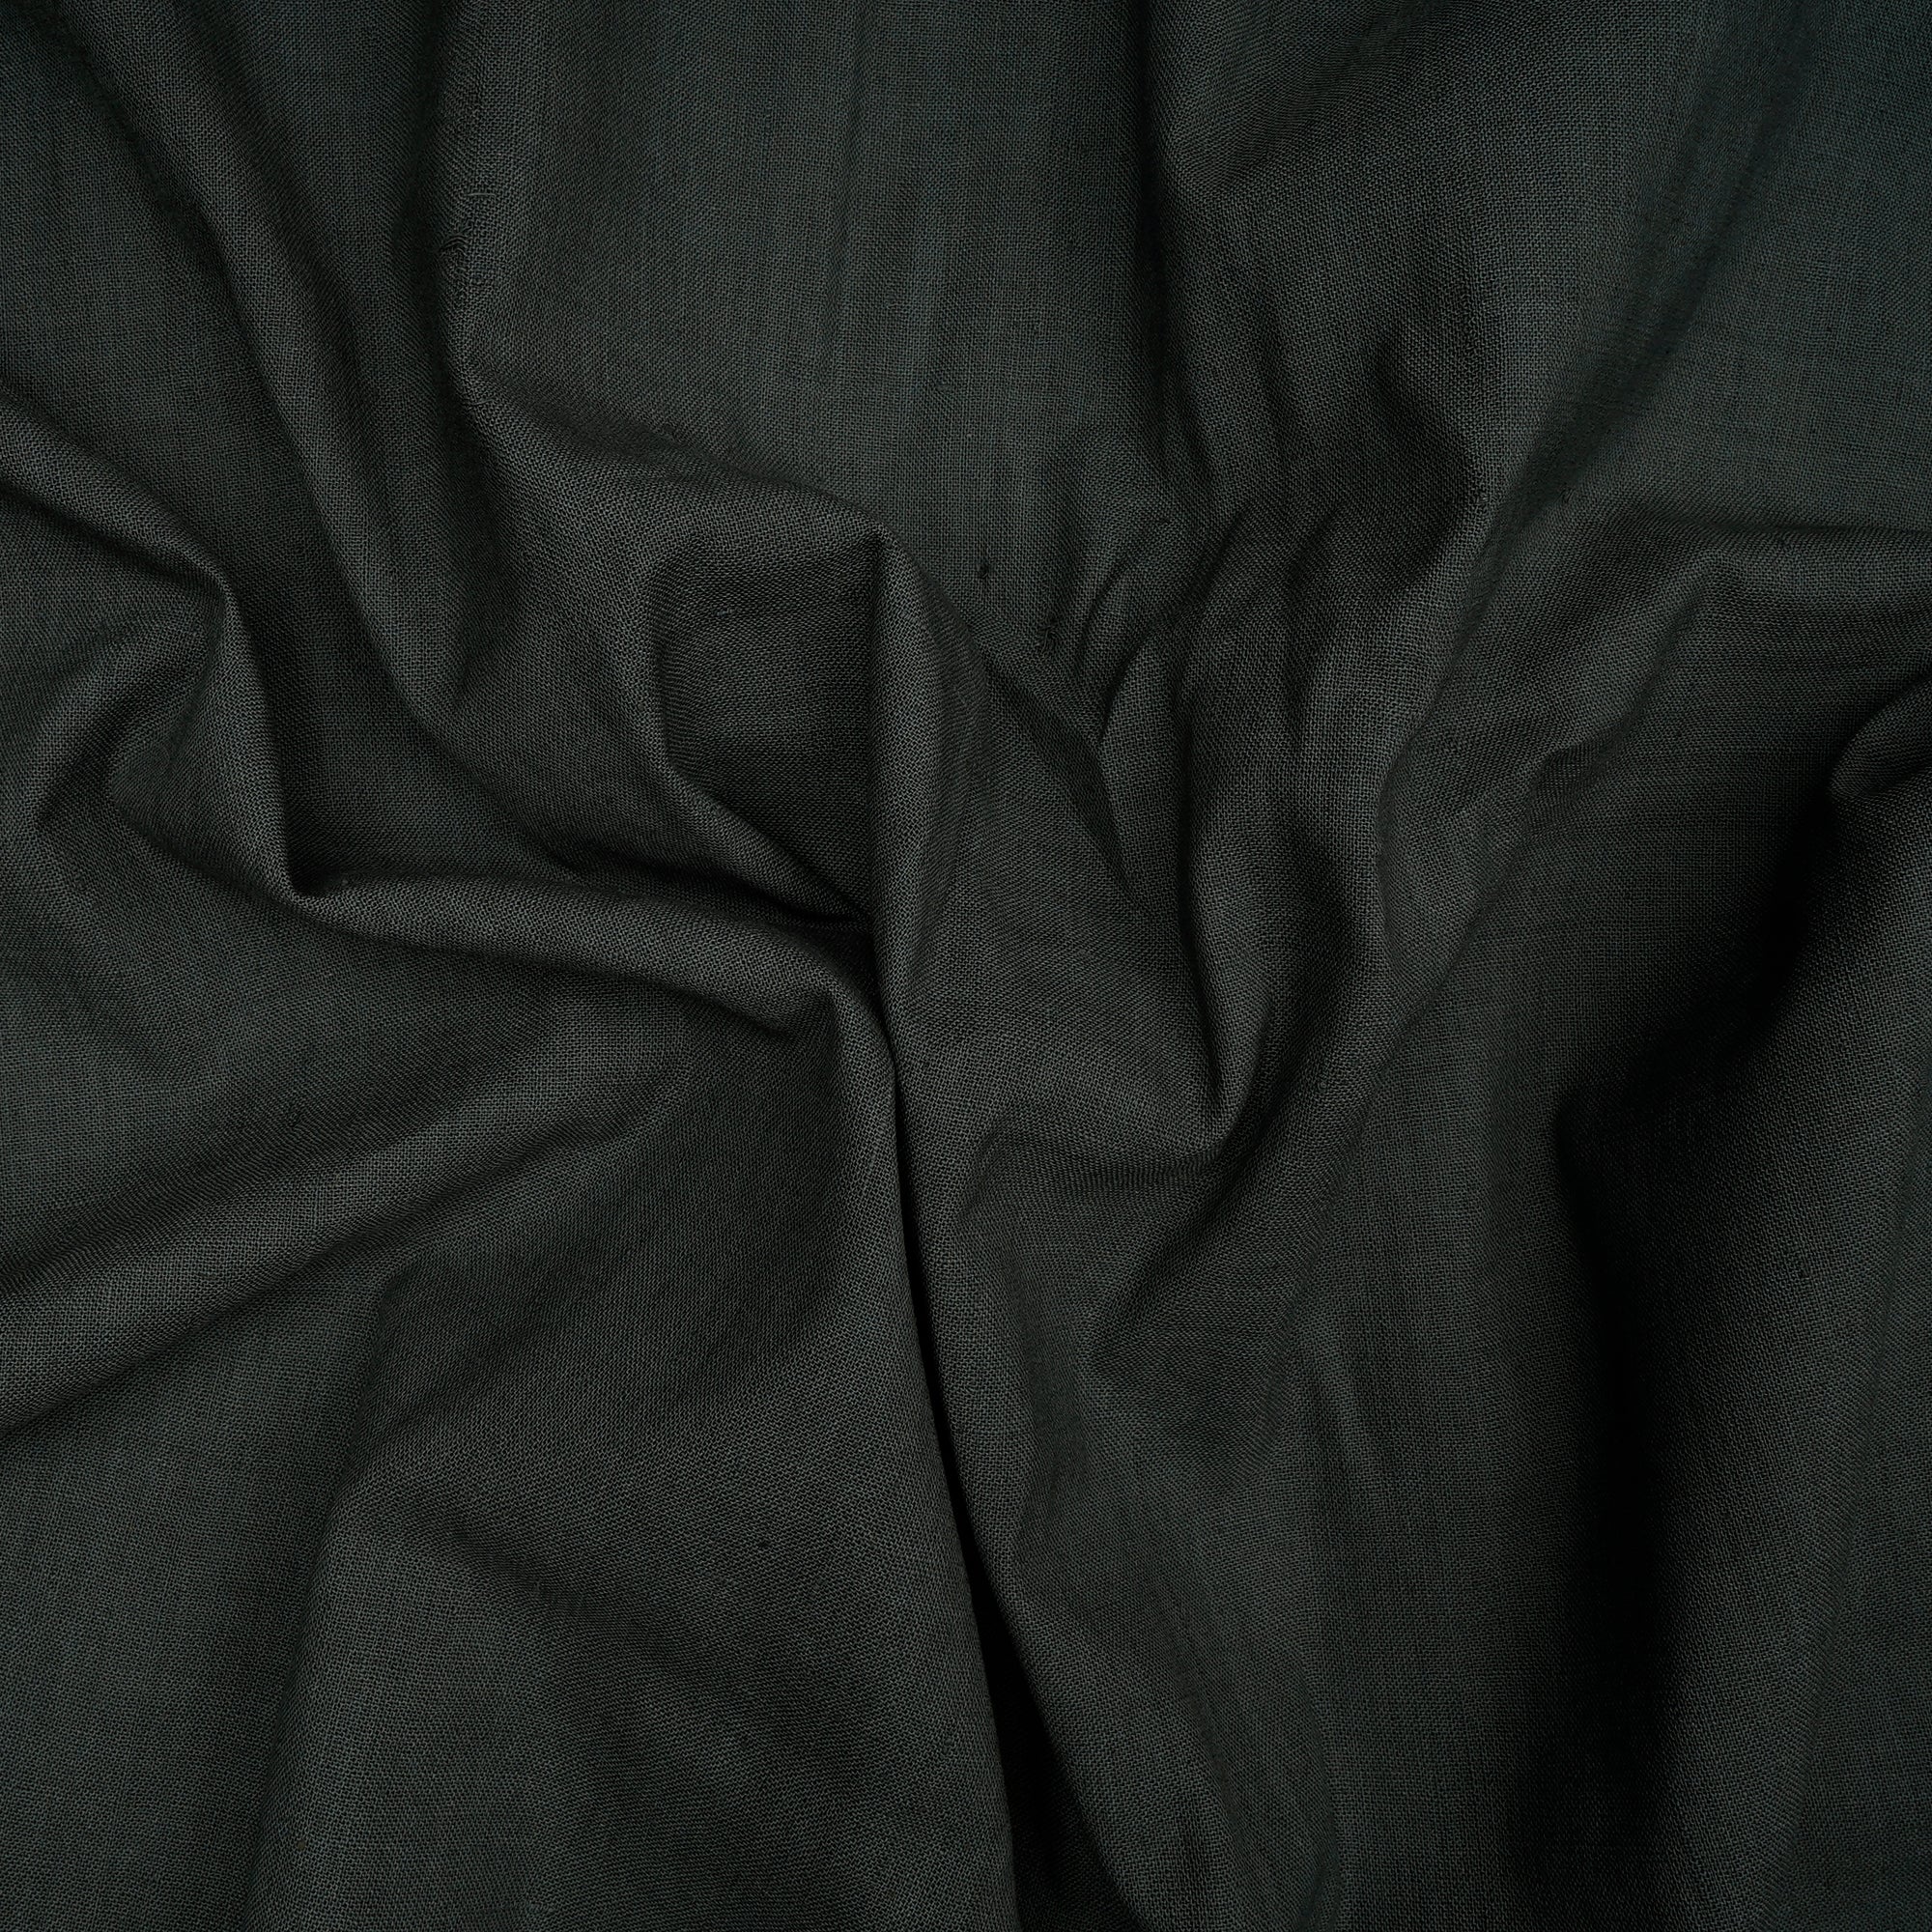 Dark Green 40's Count Piece Dyed Handspun Handwoven Cotton Fabric